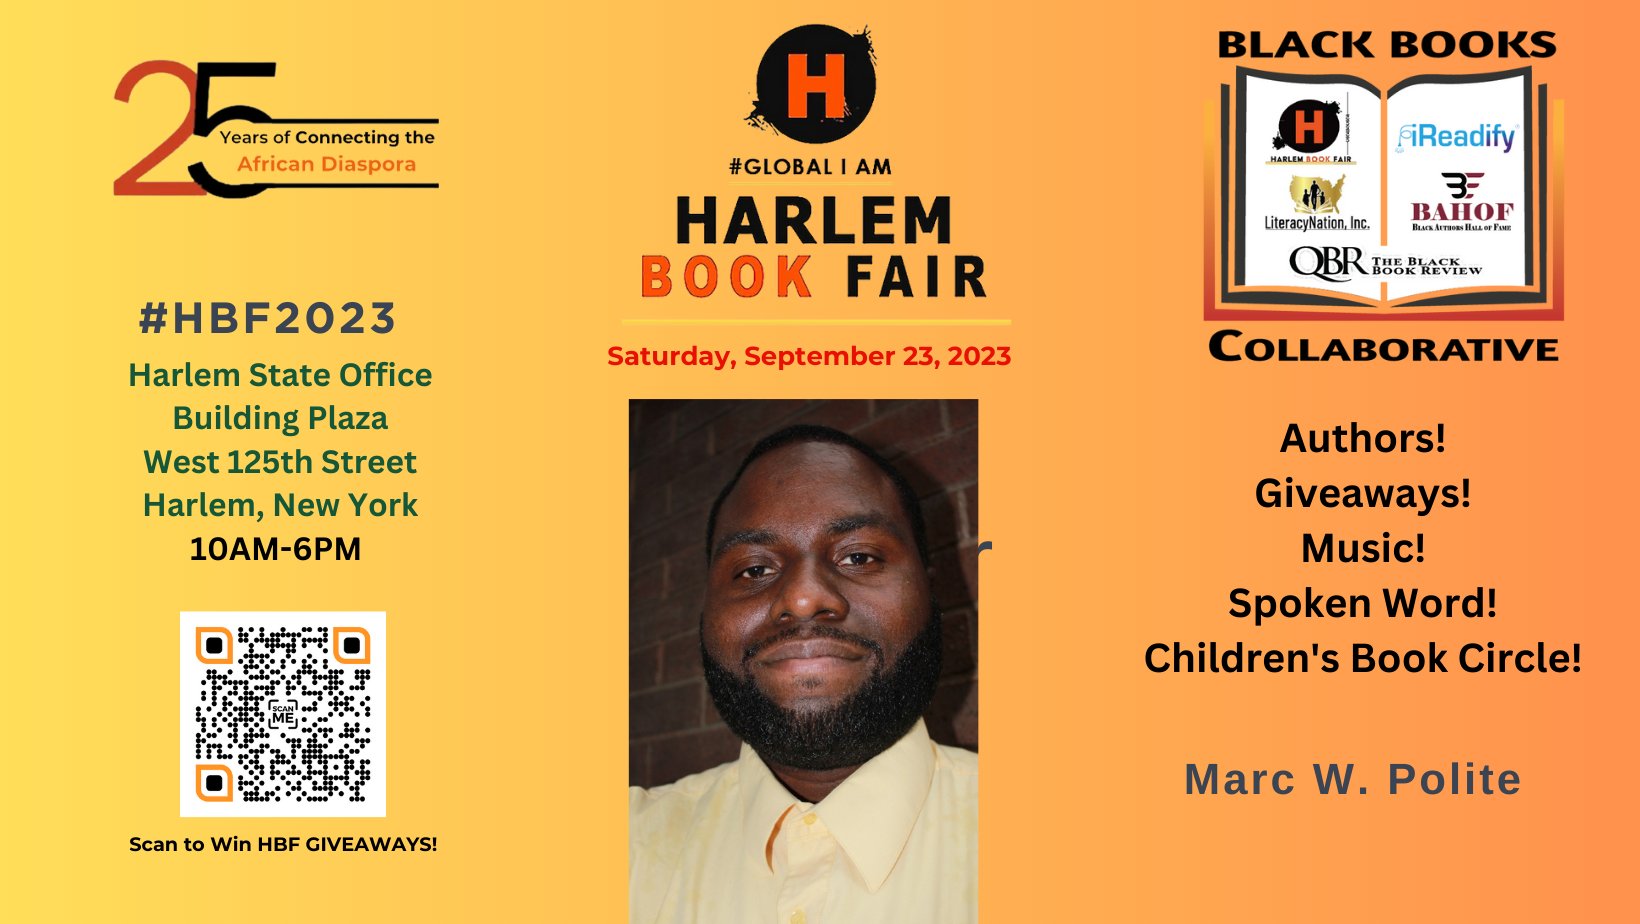 Meet Marc Polite at the Harlem Book Fair 2023! Marc Polite